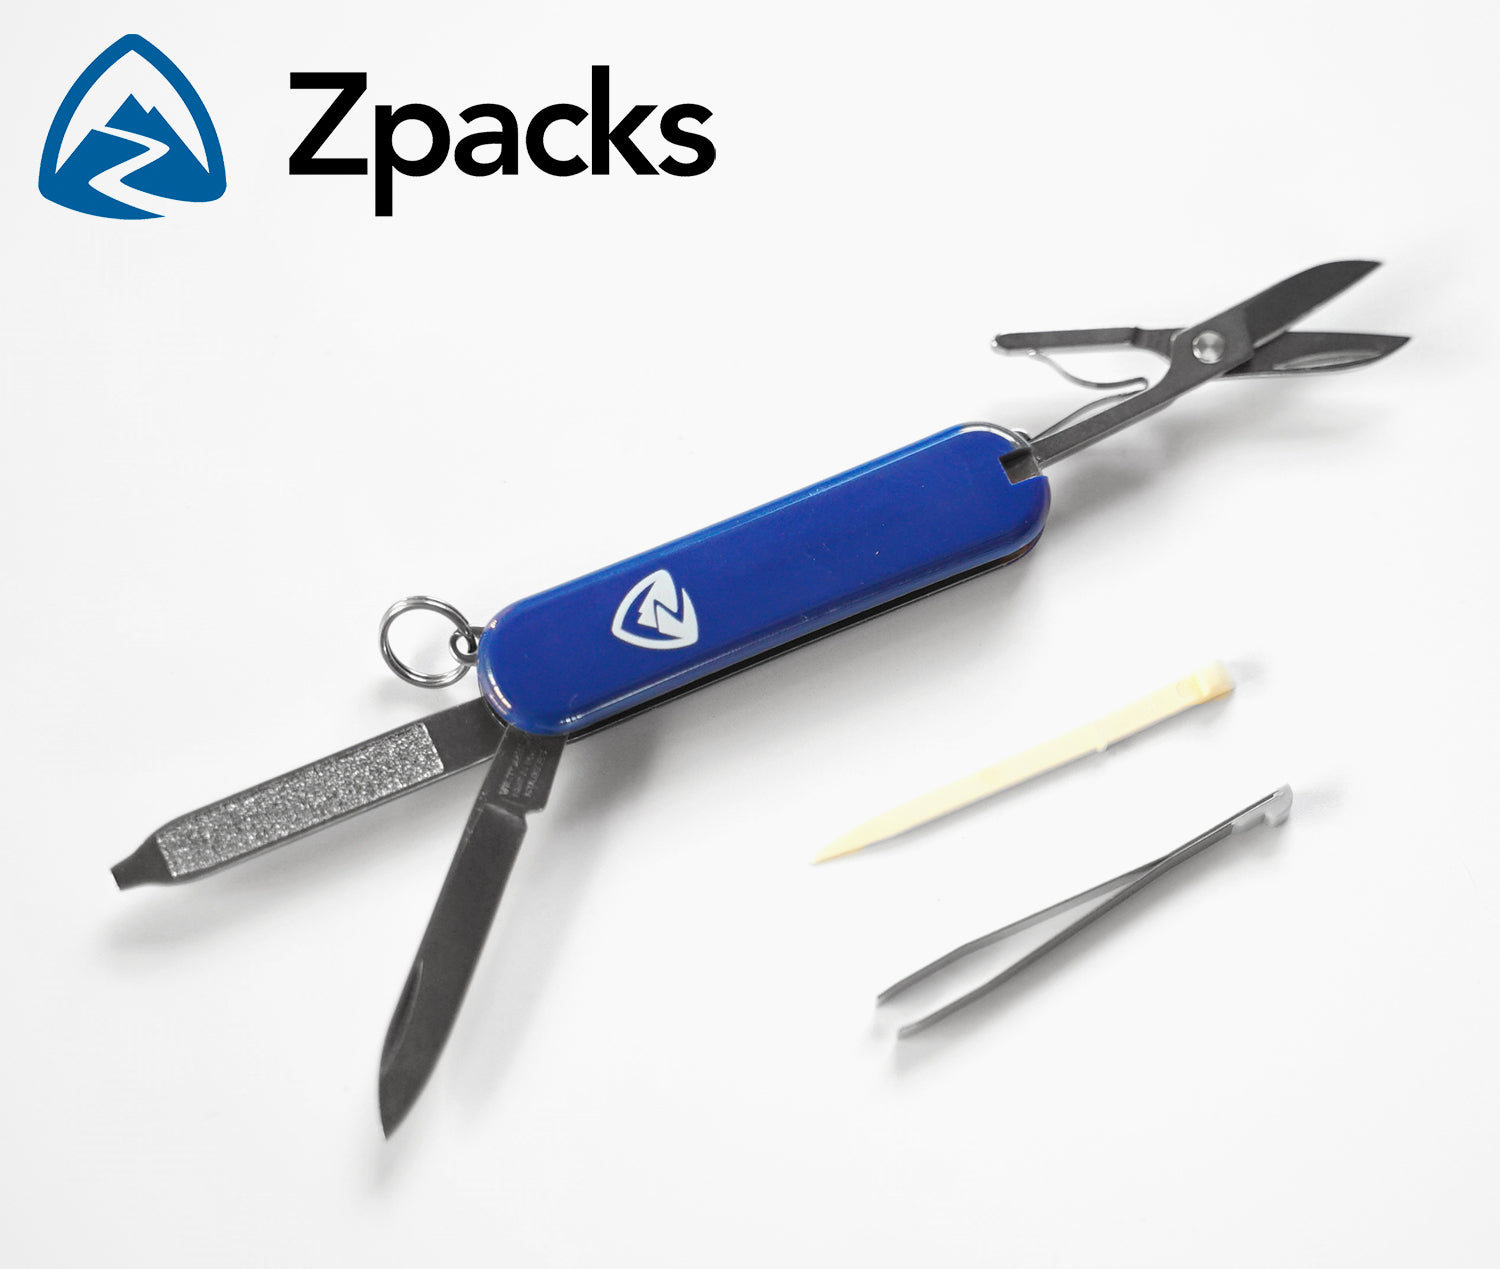 Zpacks Victorinox Classic Knife / Zパック ビクトリノックスクラシックナイフ